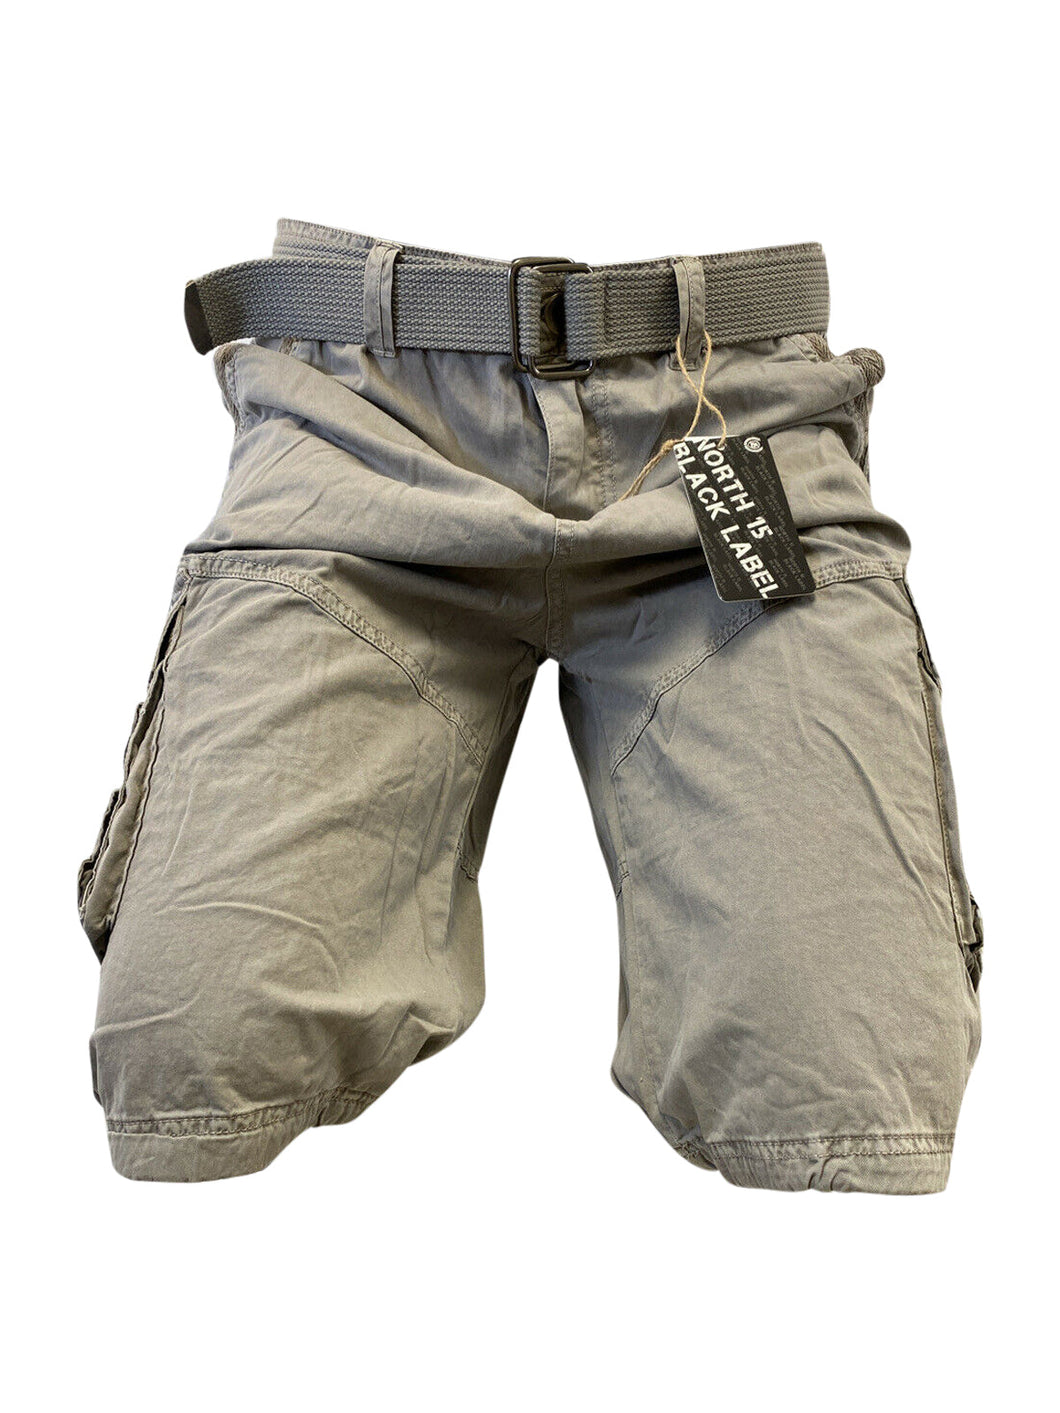 Mens Light Grey Cargo Shorts with Adjustable Belt